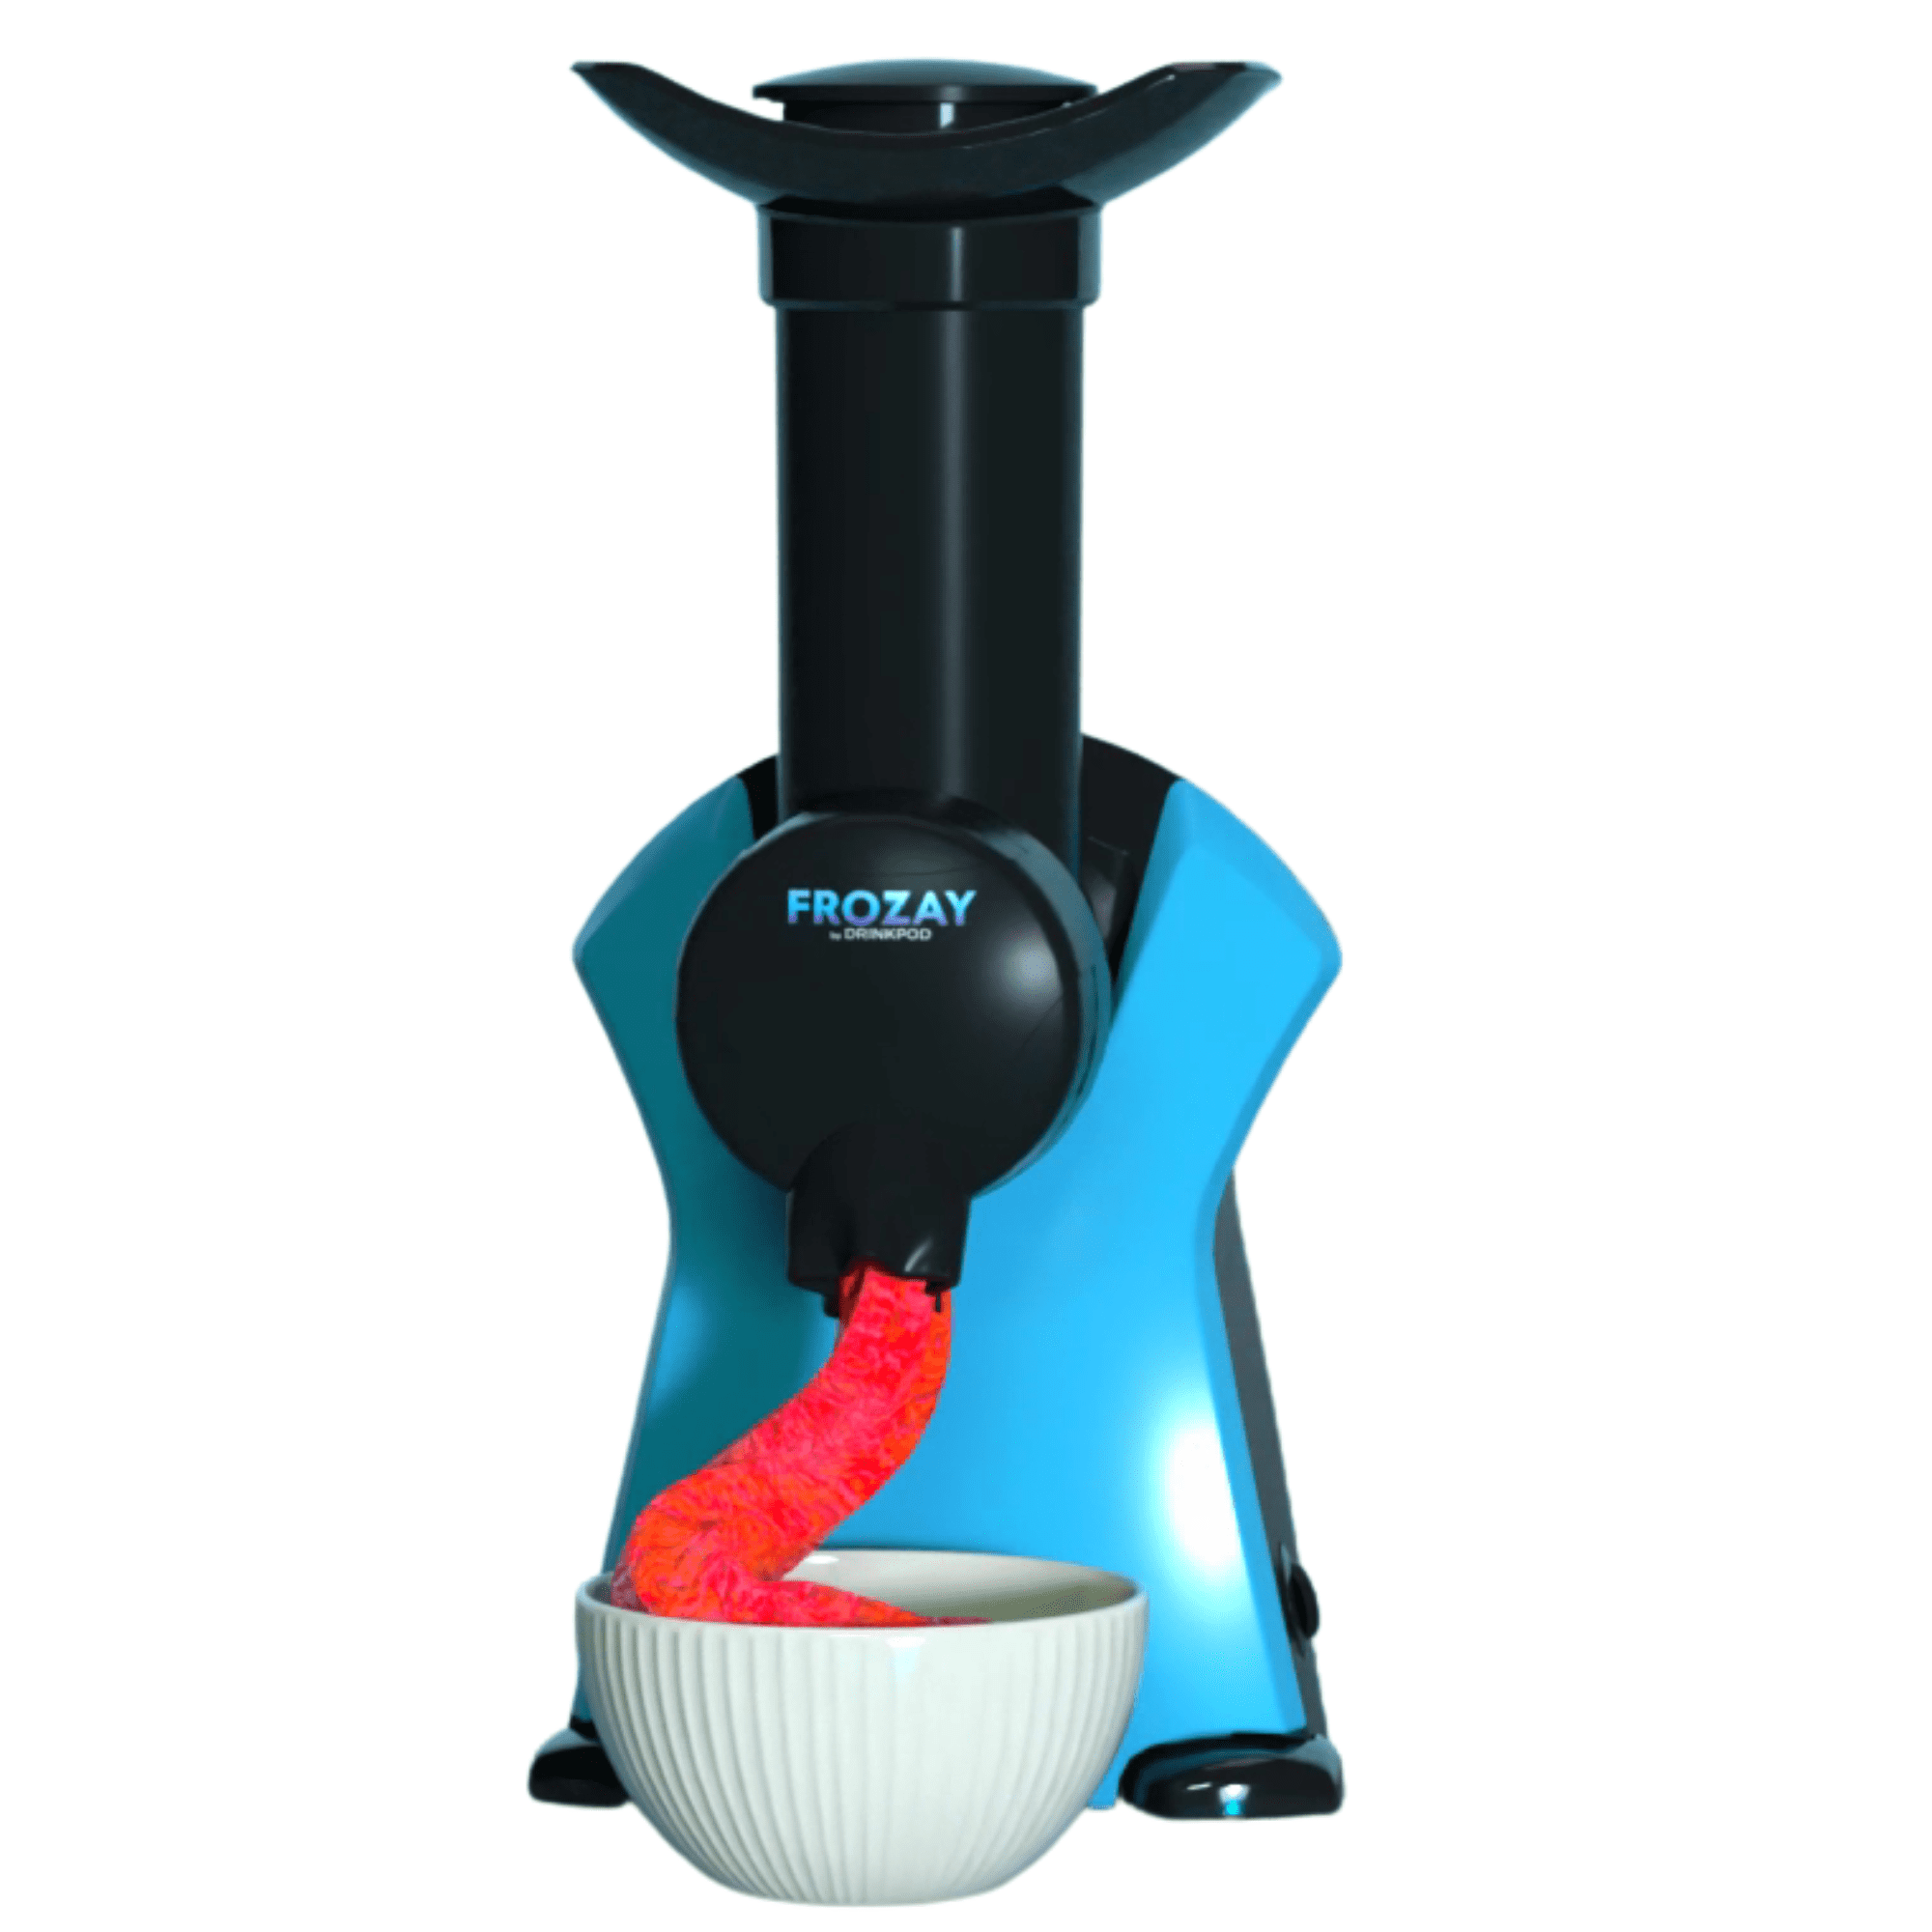 Frozay: Dairy-Free, Vegan Frozen Dessert Maker - Soft Serve Yogurt & Ice Cream Drinkpod LLC Color: White